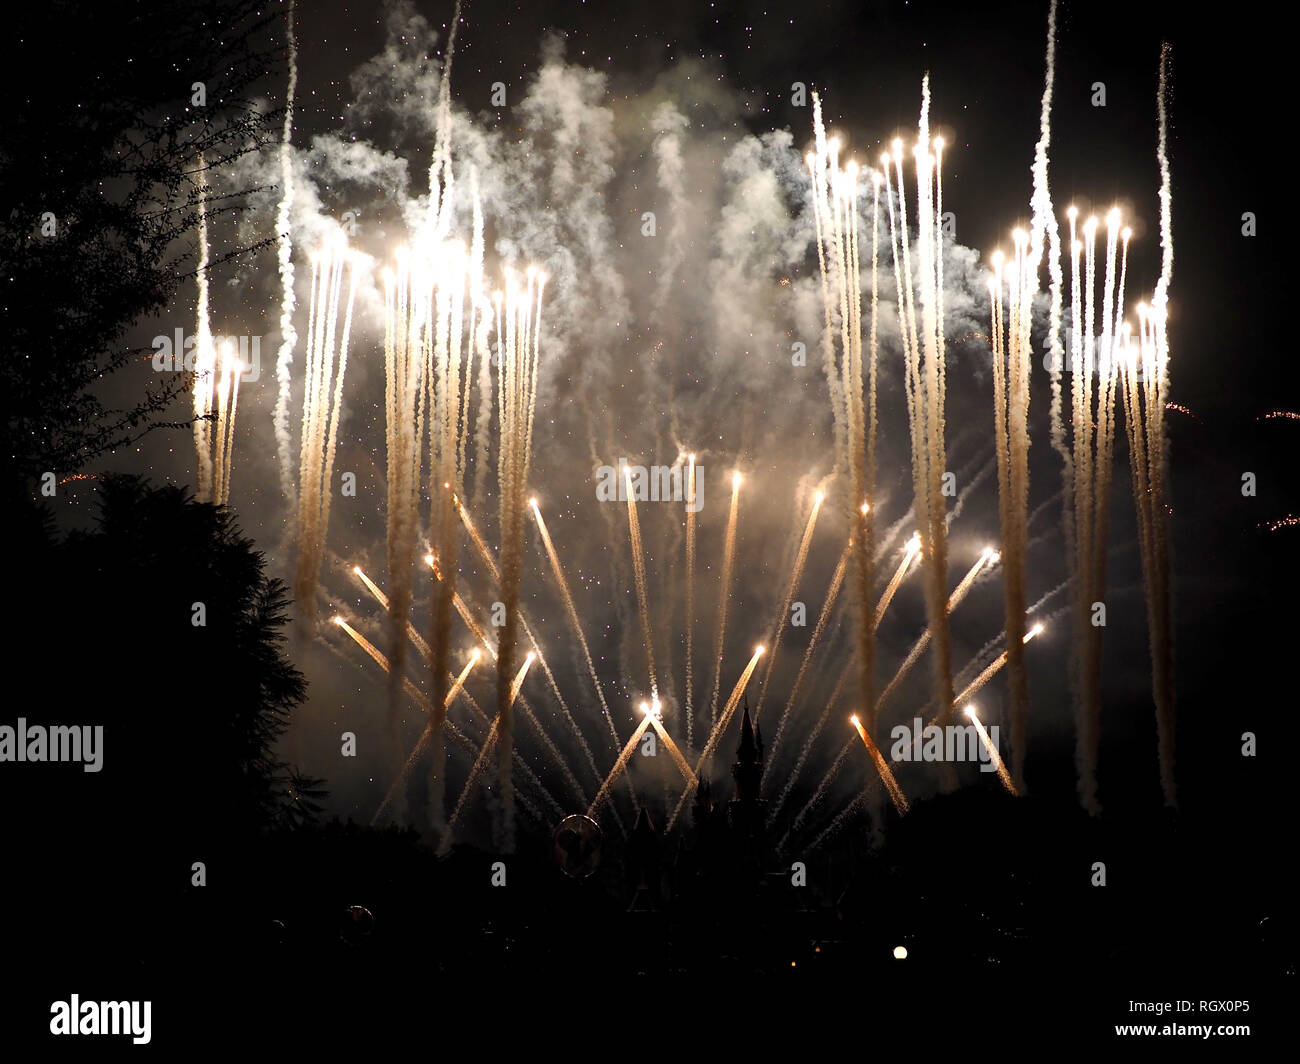 Disney firework time at night, Disneyland, CA, USA Stock Photo